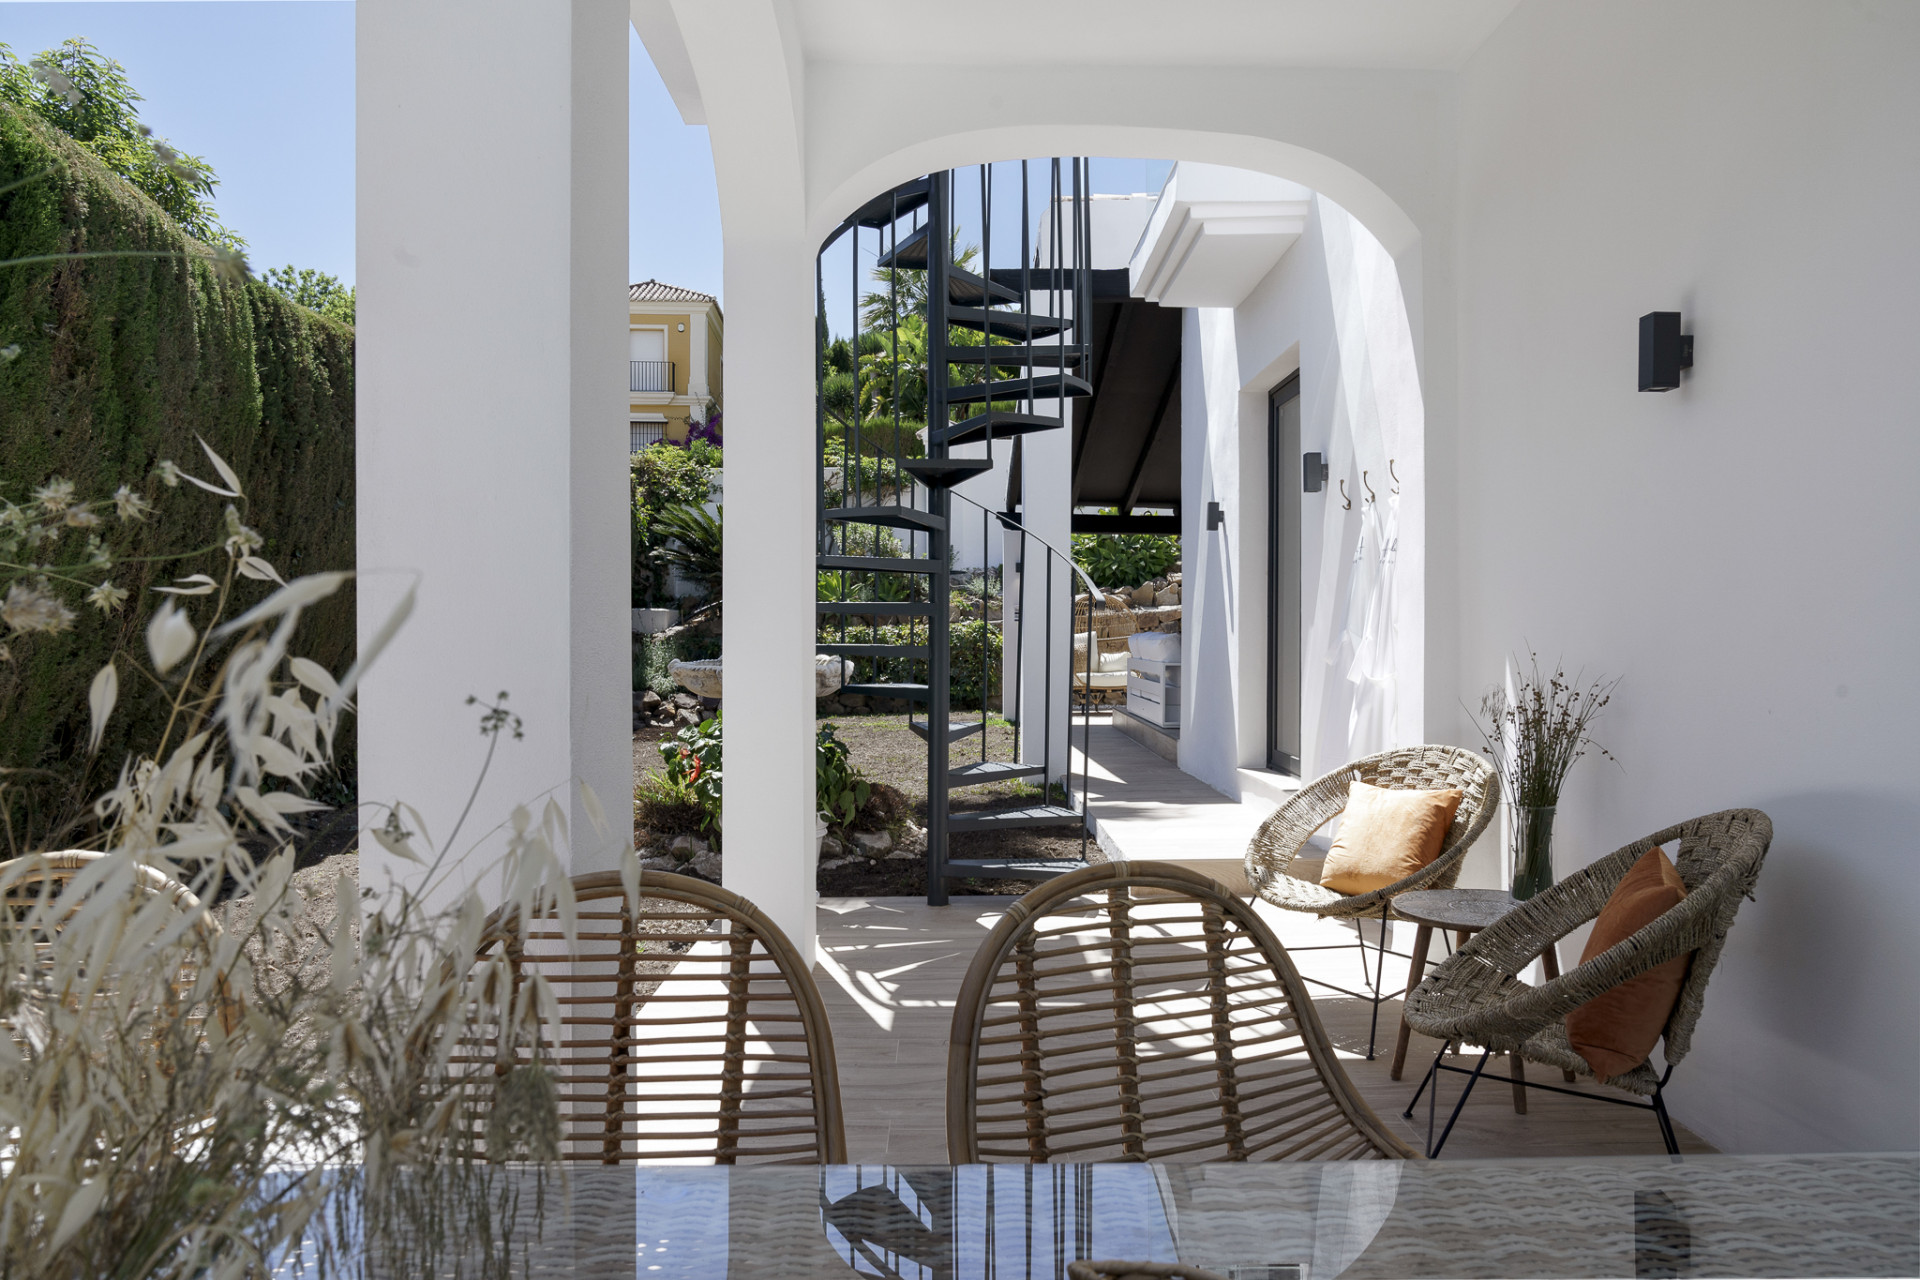 Villa Hibisco, contemporary villa situated in a private and secure community in Nueva Andalucia.